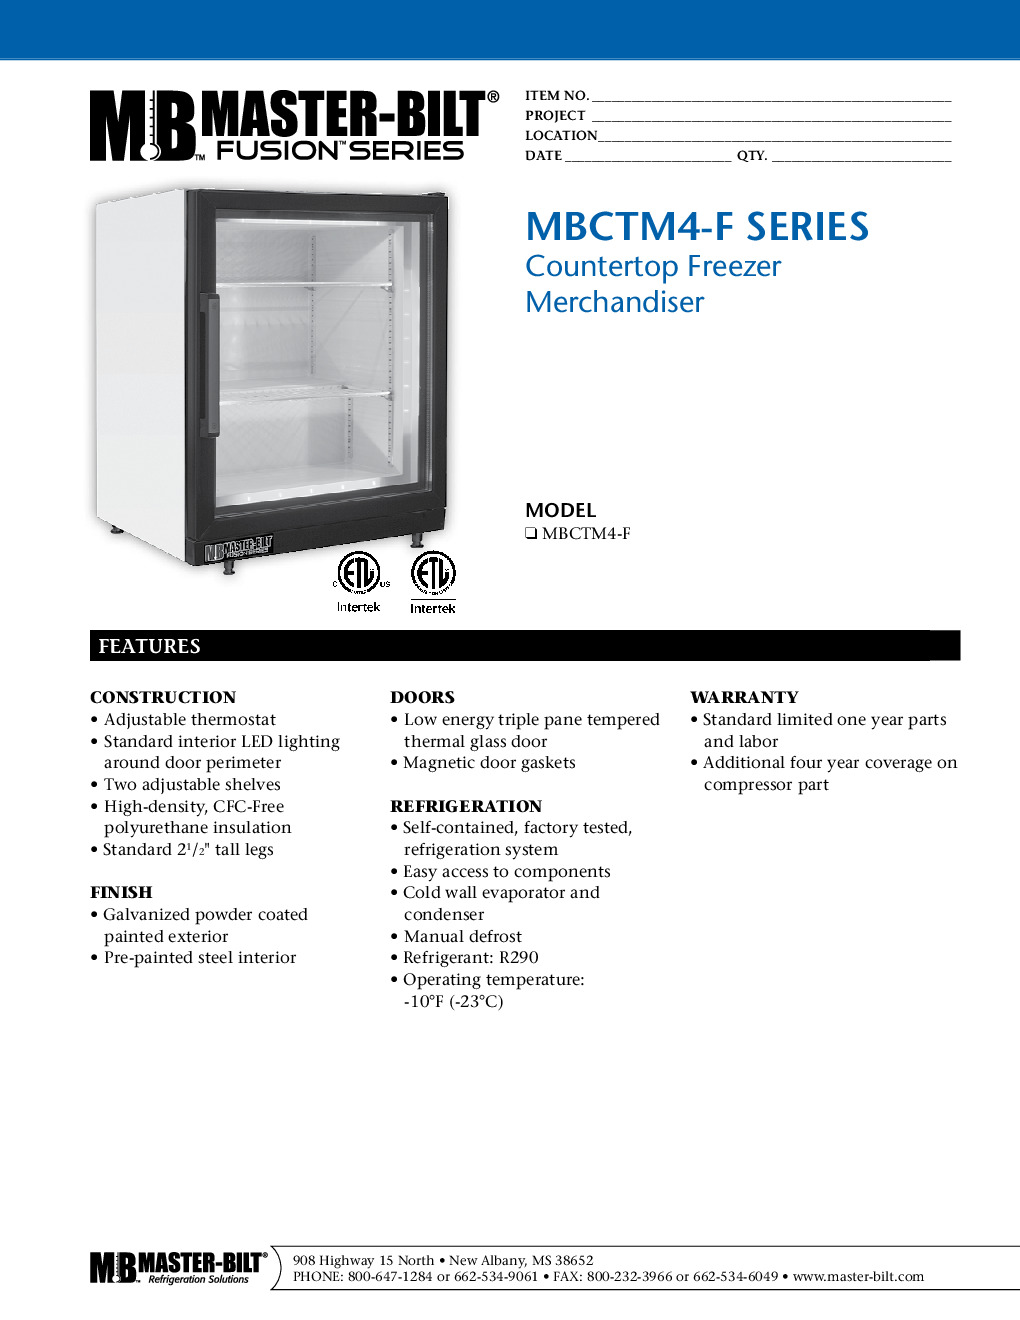 Master-Bilt MBCTM4-F Countertop Merchandiser Freezer